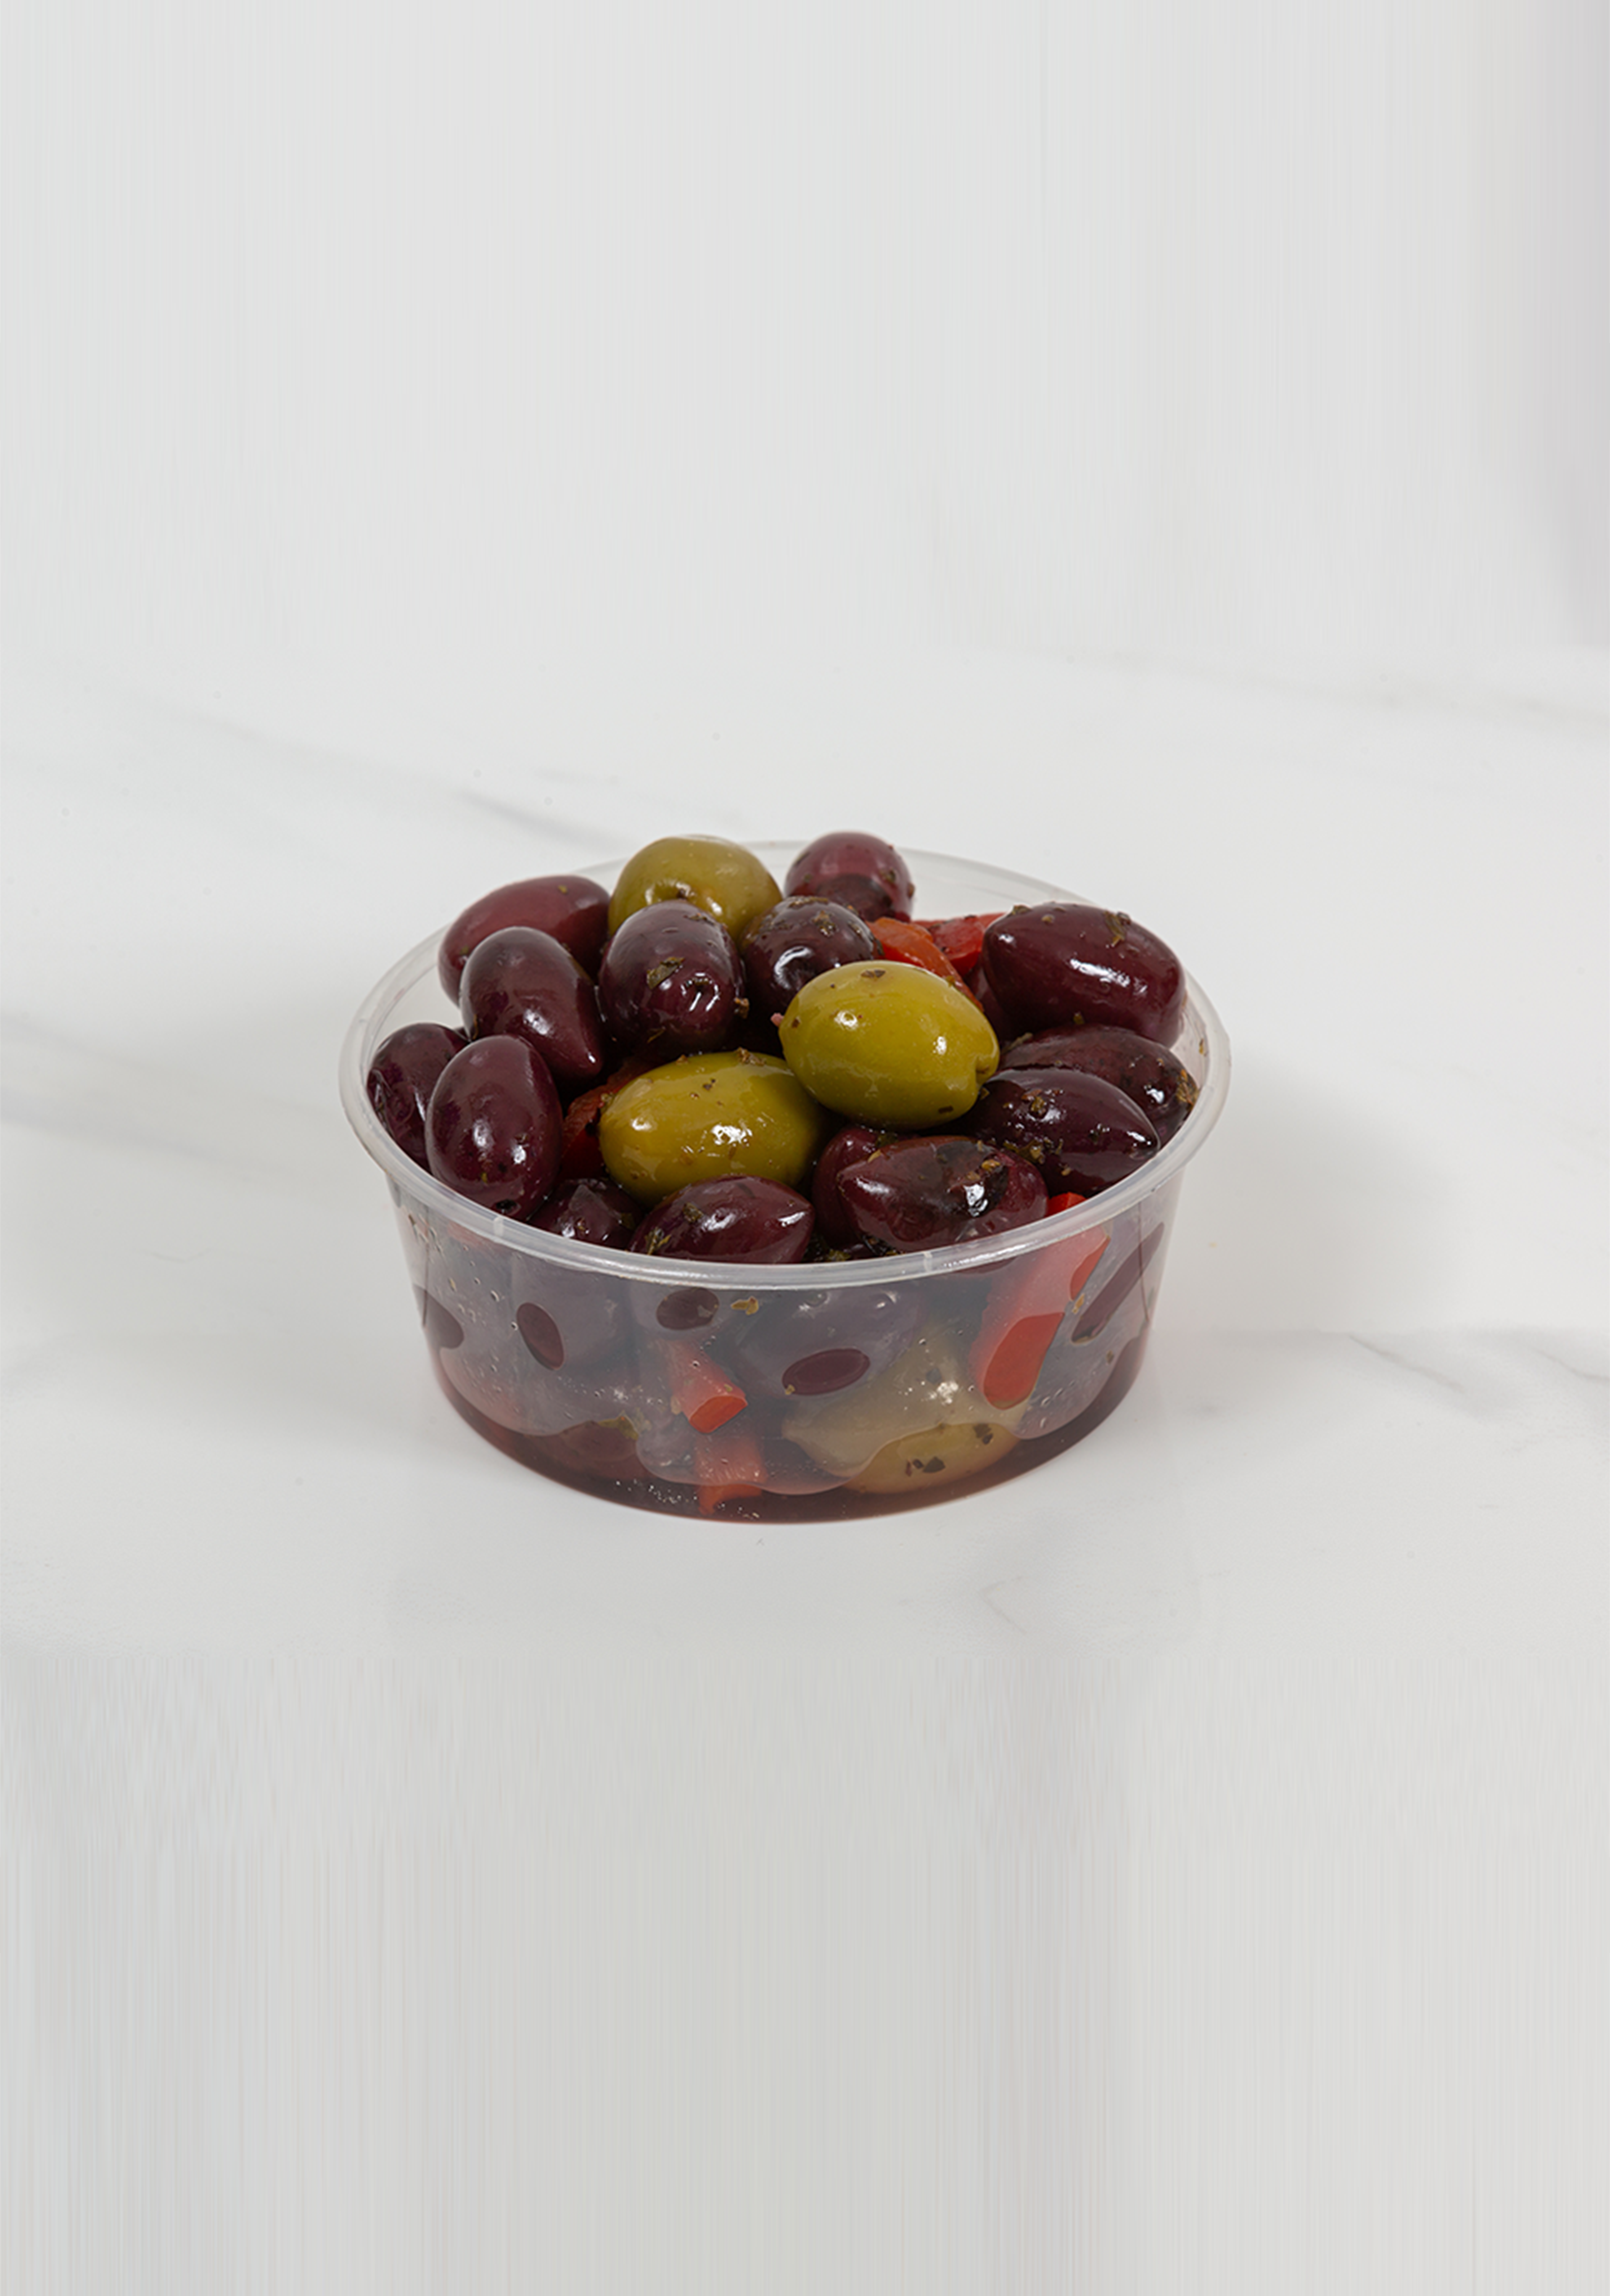 Olives Provencal Marinated with Lemon and Garlic - $25 per kilo